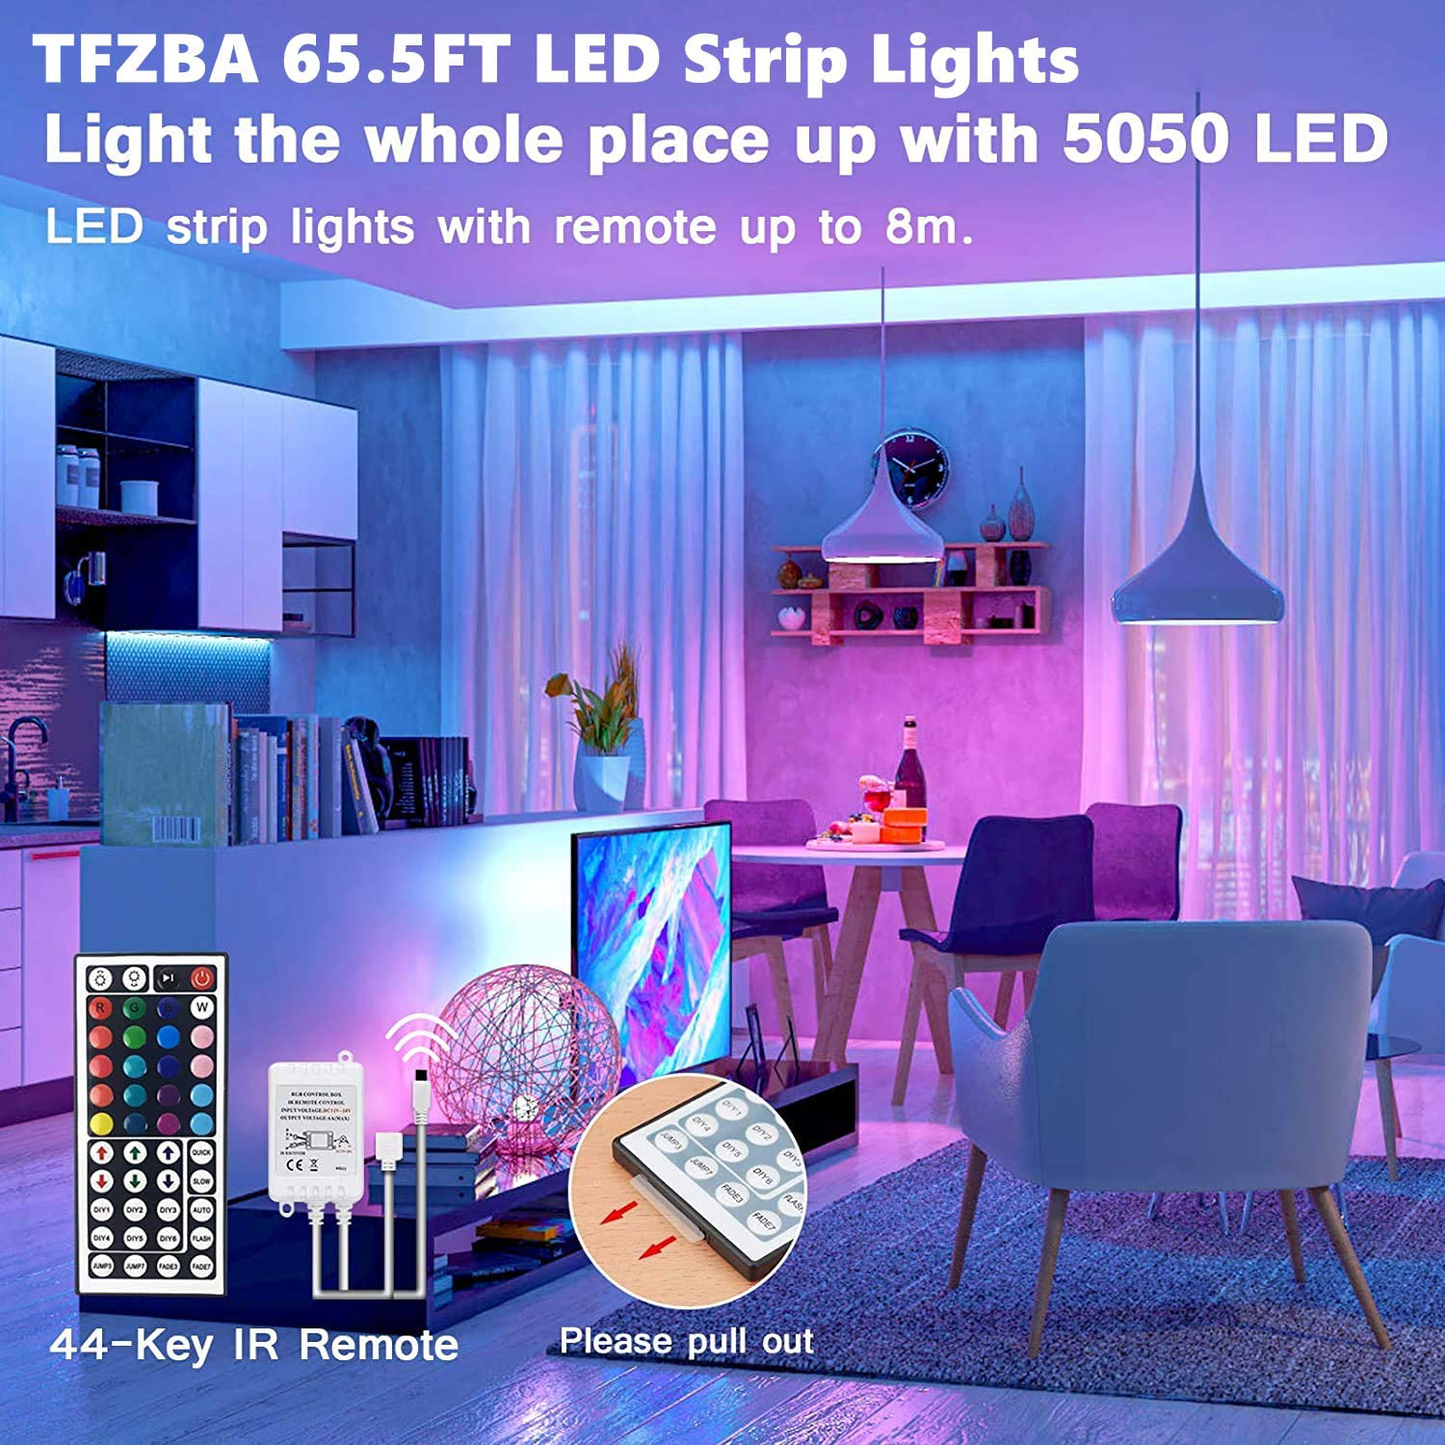 Tfzba 65.6ft Led Strip Lights, LED Lights for Bedroom, Ultra Long LED Lights RGB 5050 LED Light Strips Kit with 44 Keys Ir Remote Led Lights for Home Living Kitchen Room and Party